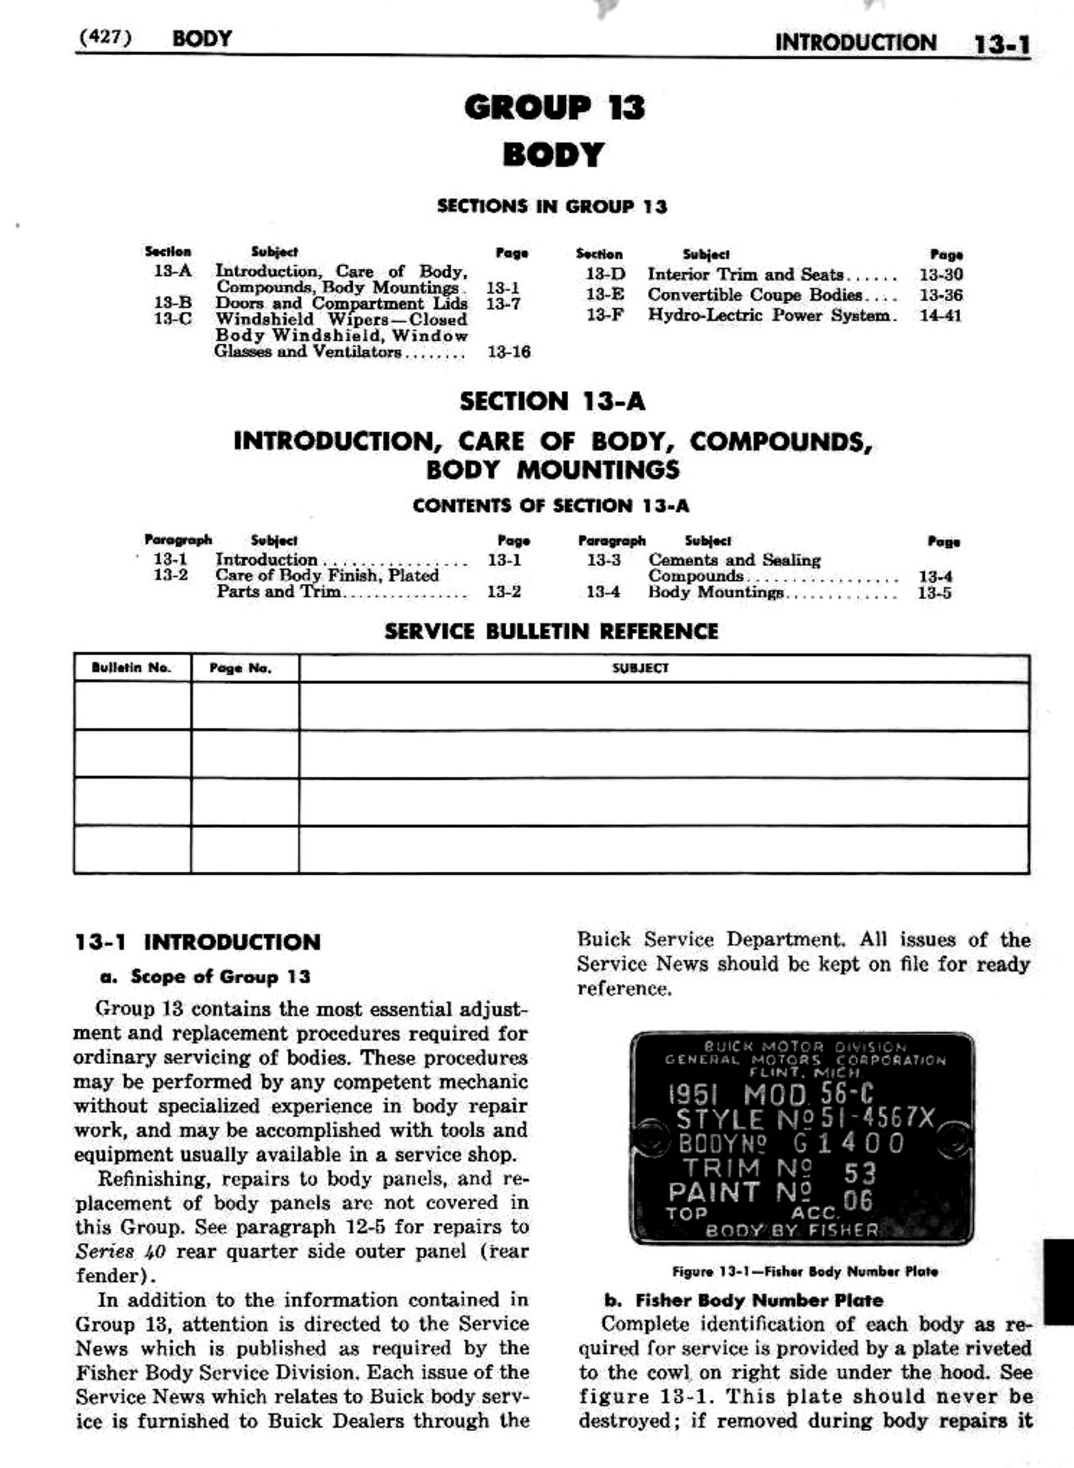 n_14 1951 Buick Shop Manual - Body-001-001.jpg